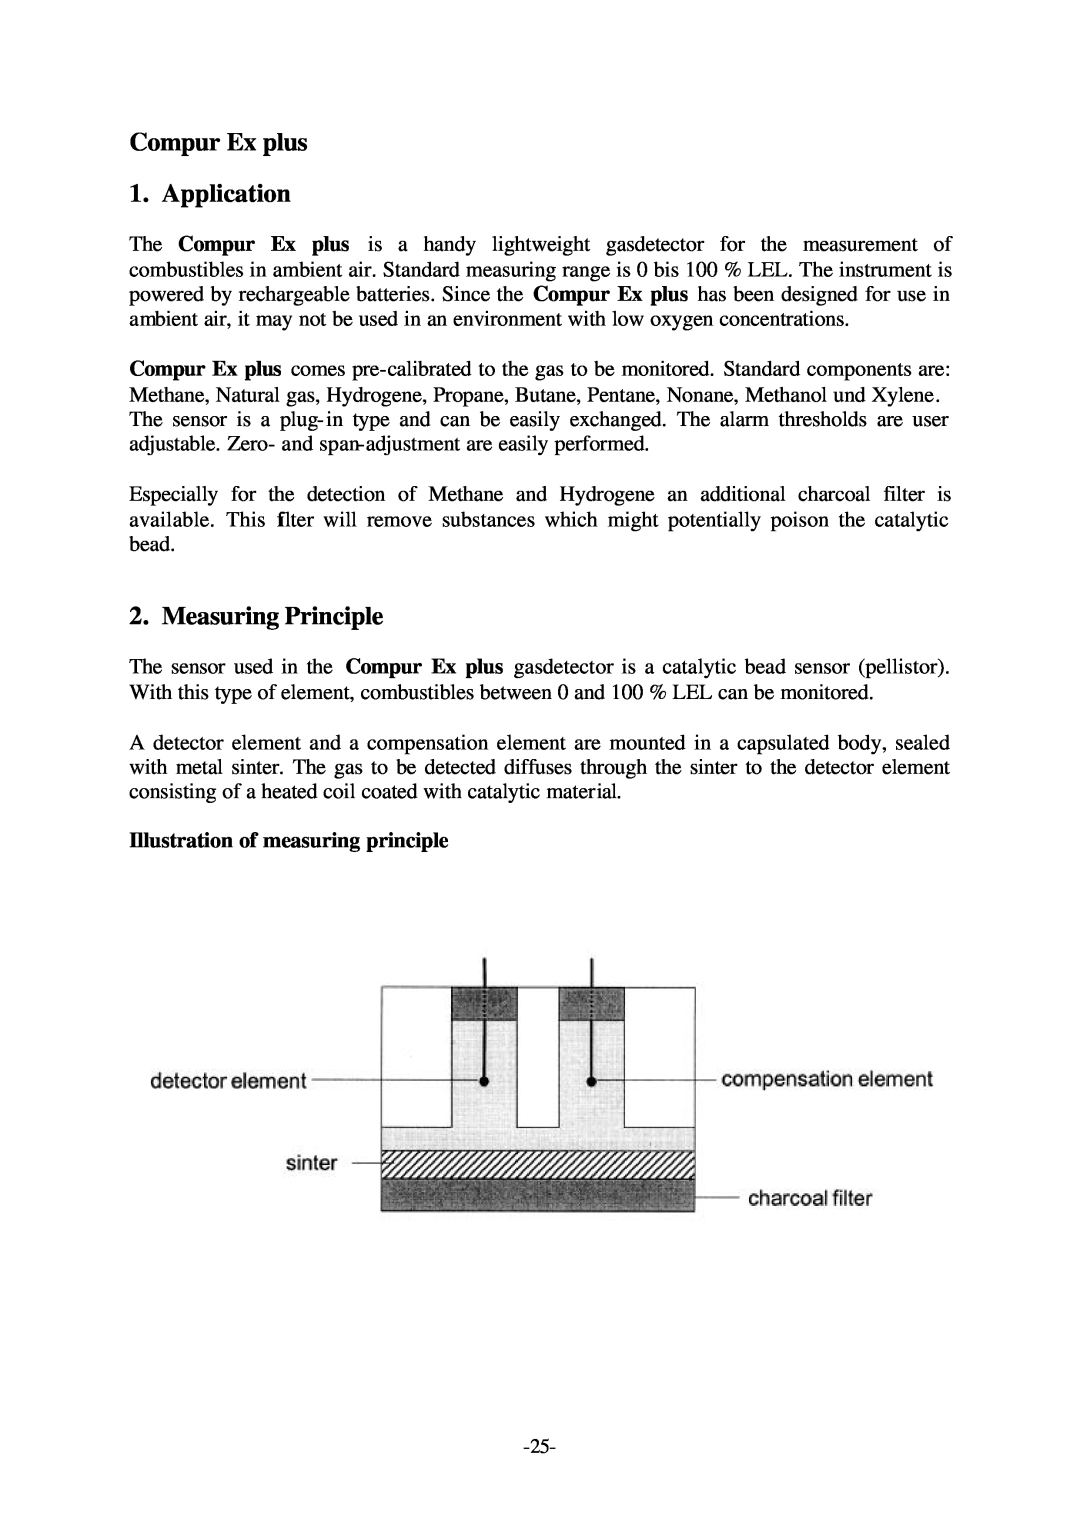 Compur Gas Detector manual Compur Ex plus 1. Application, Measuring Principle, Illustration of measuring principle 